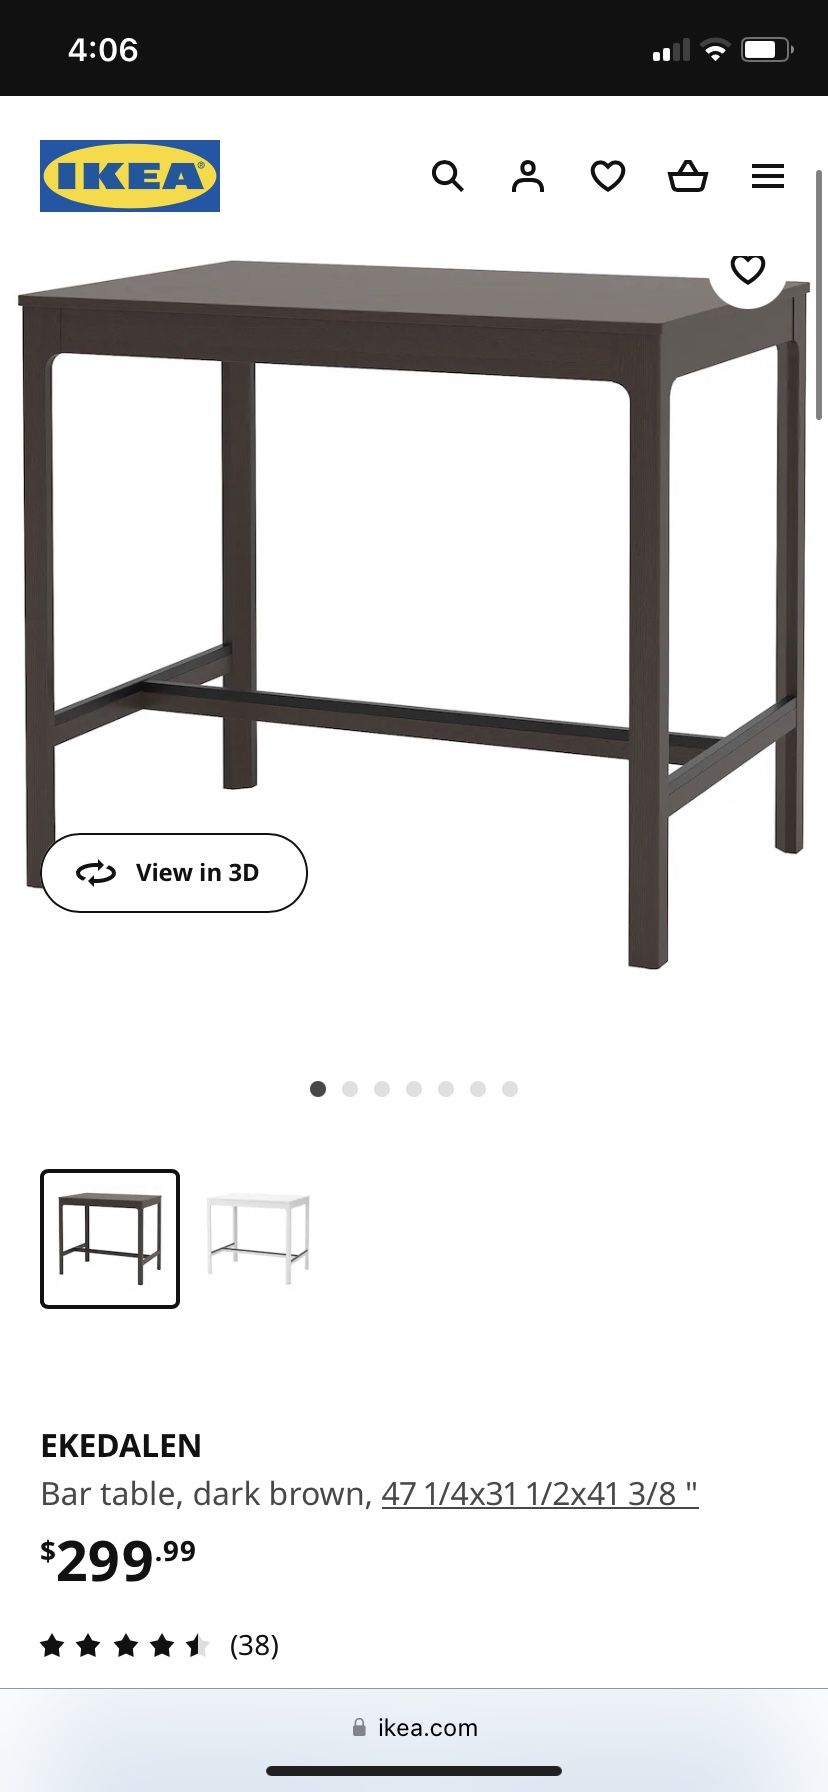 IKEA Ekedalen Bar Table 